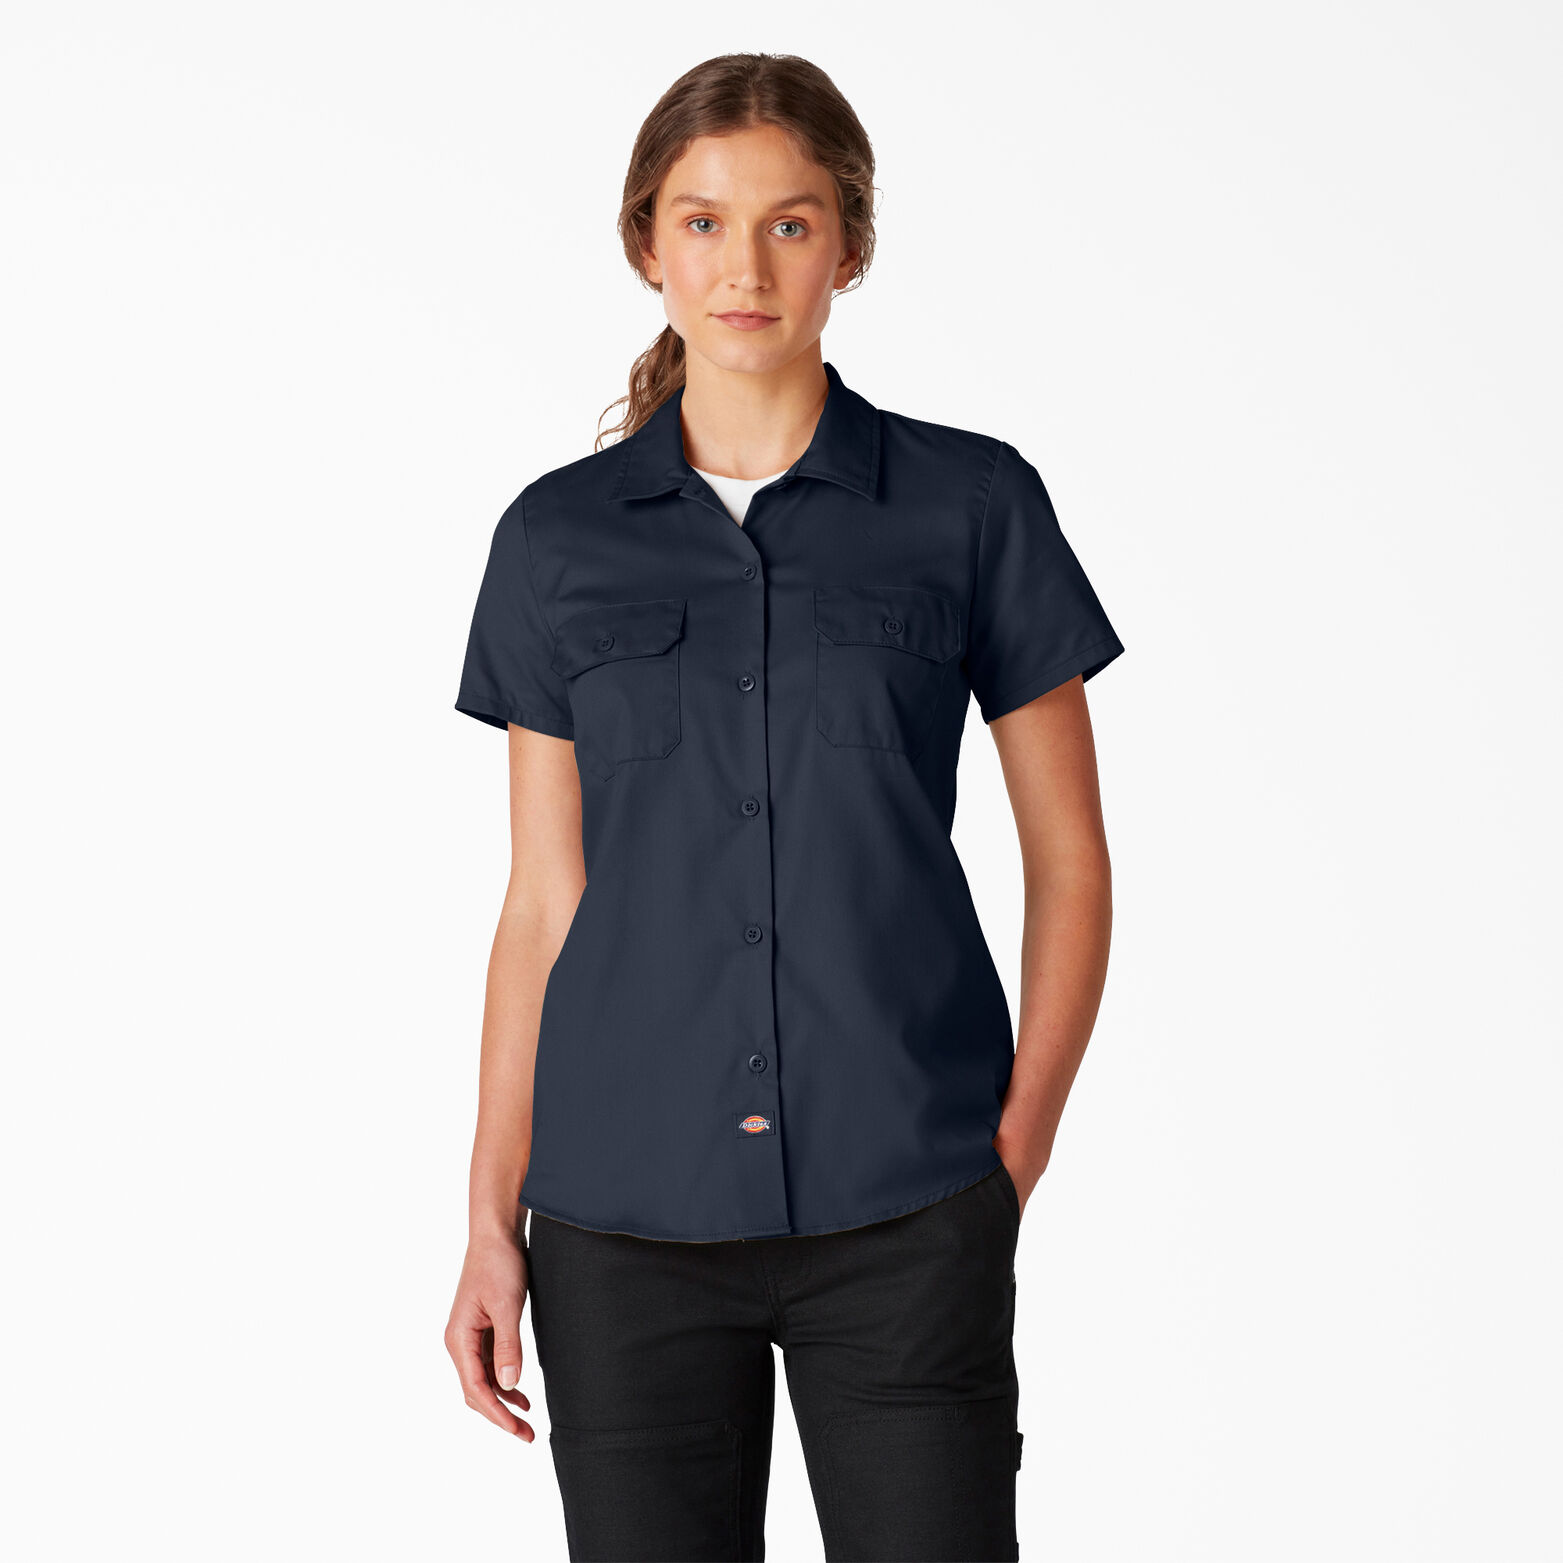 Dickies Women's Short-Sleeve Flex Work Shirt, Dark Navy